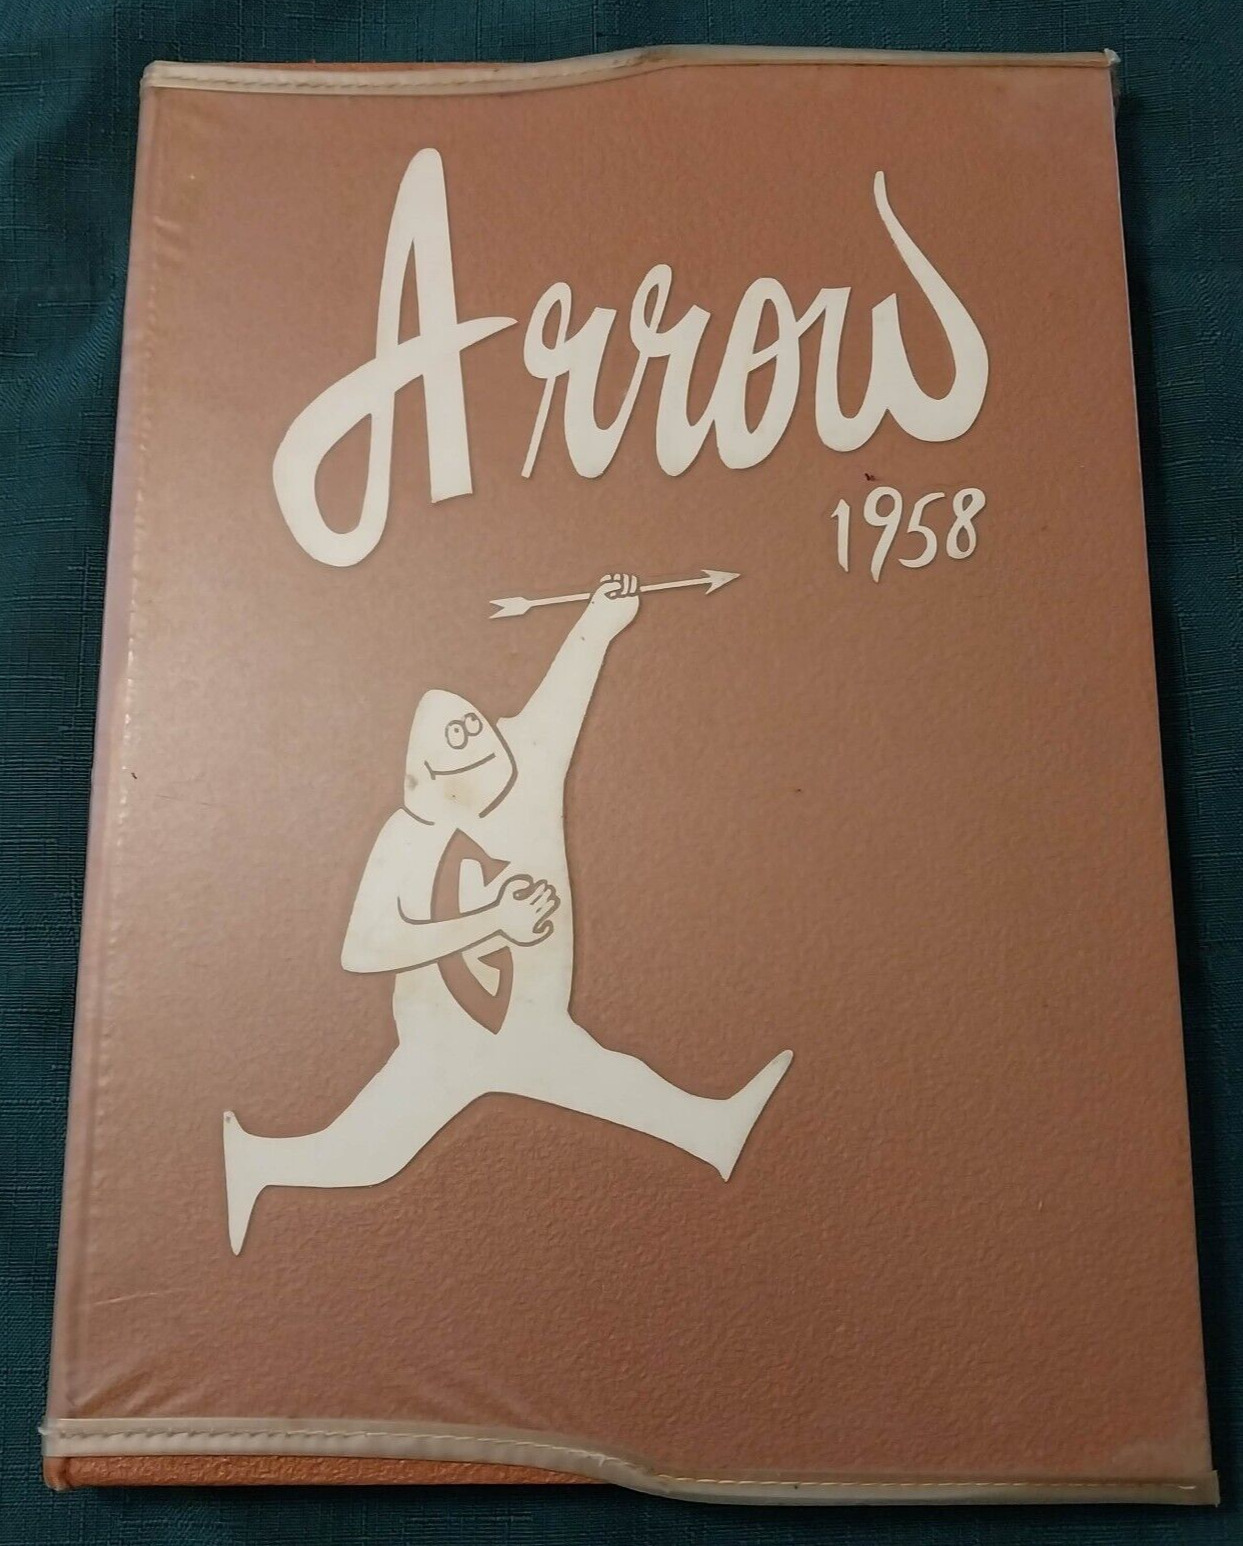 Vintage Garfield High School 1958 Arrow Yearbook. Seattle, Washington